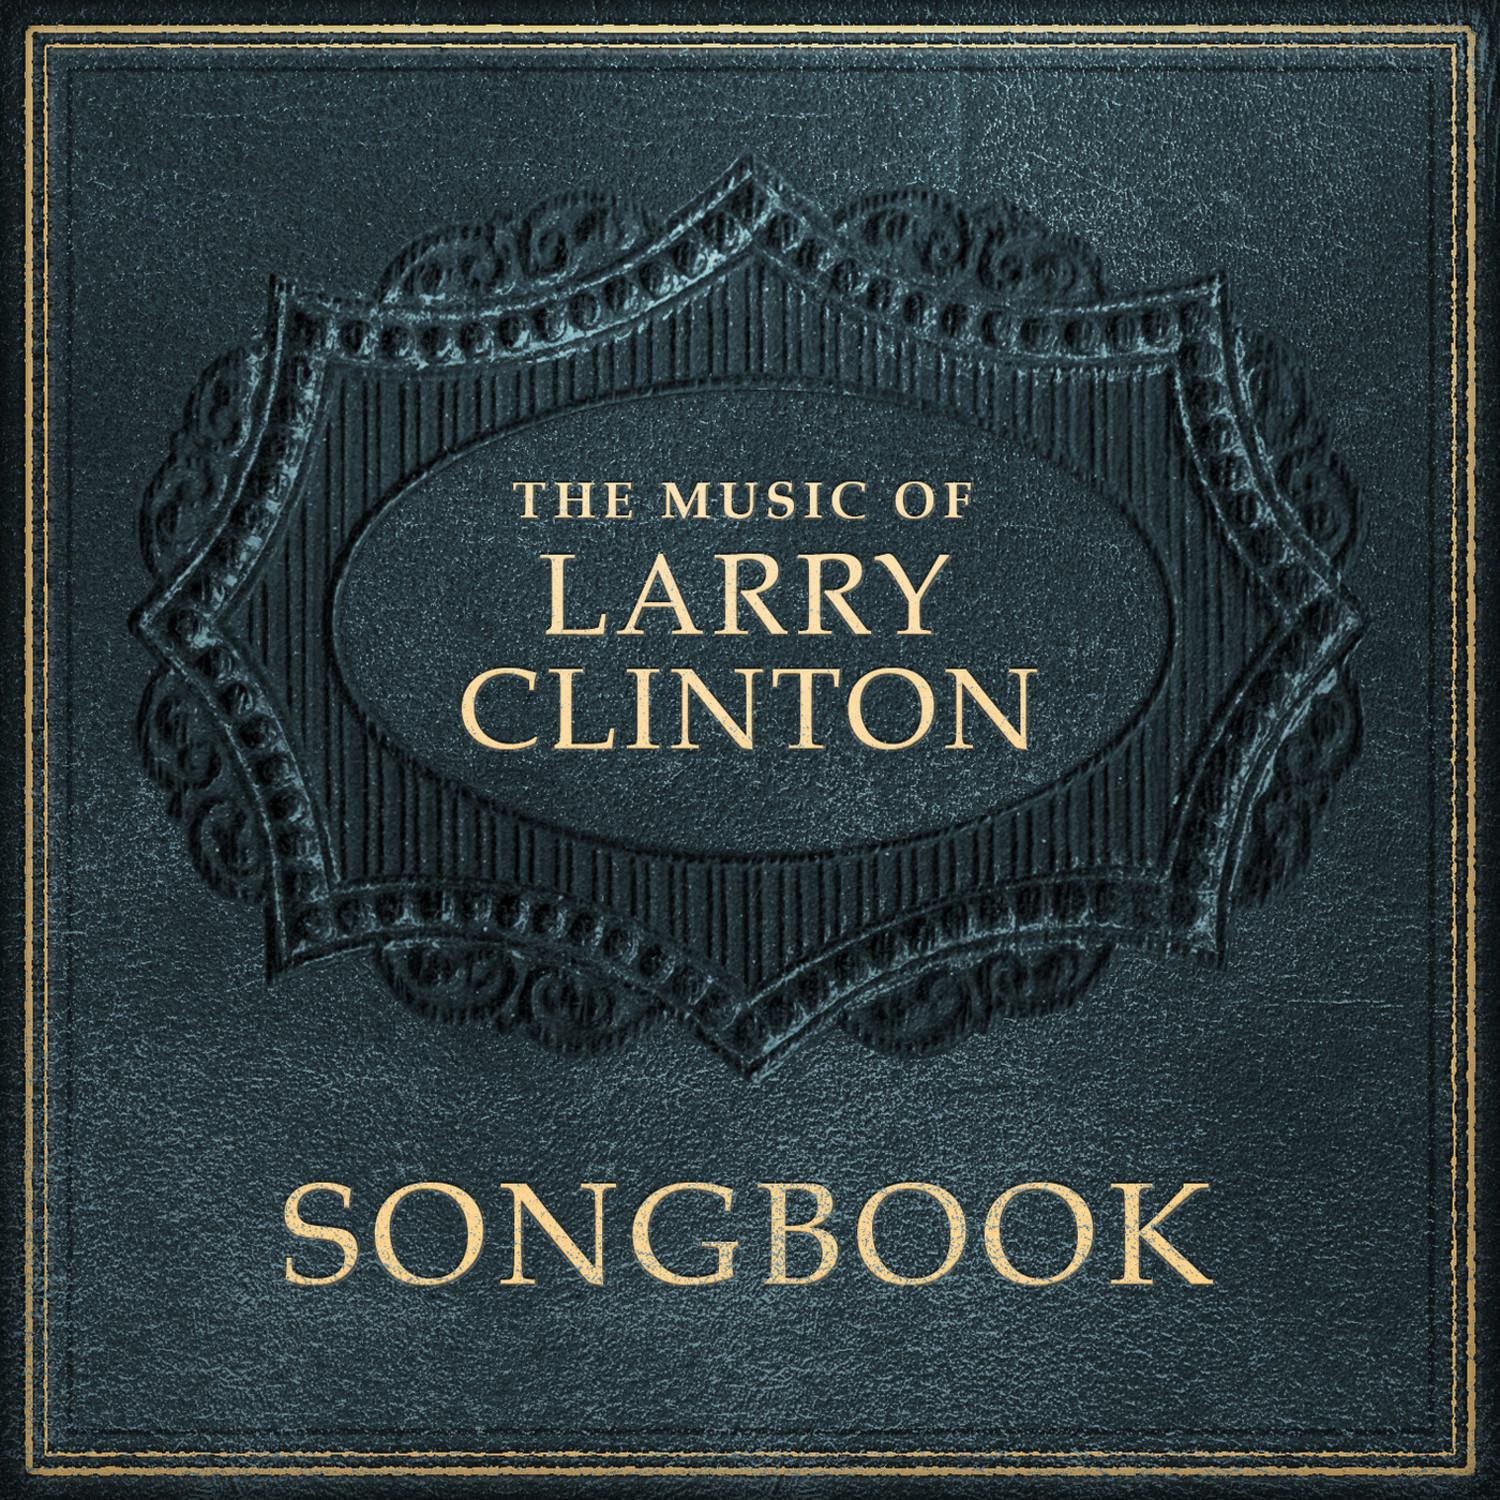 Songbook